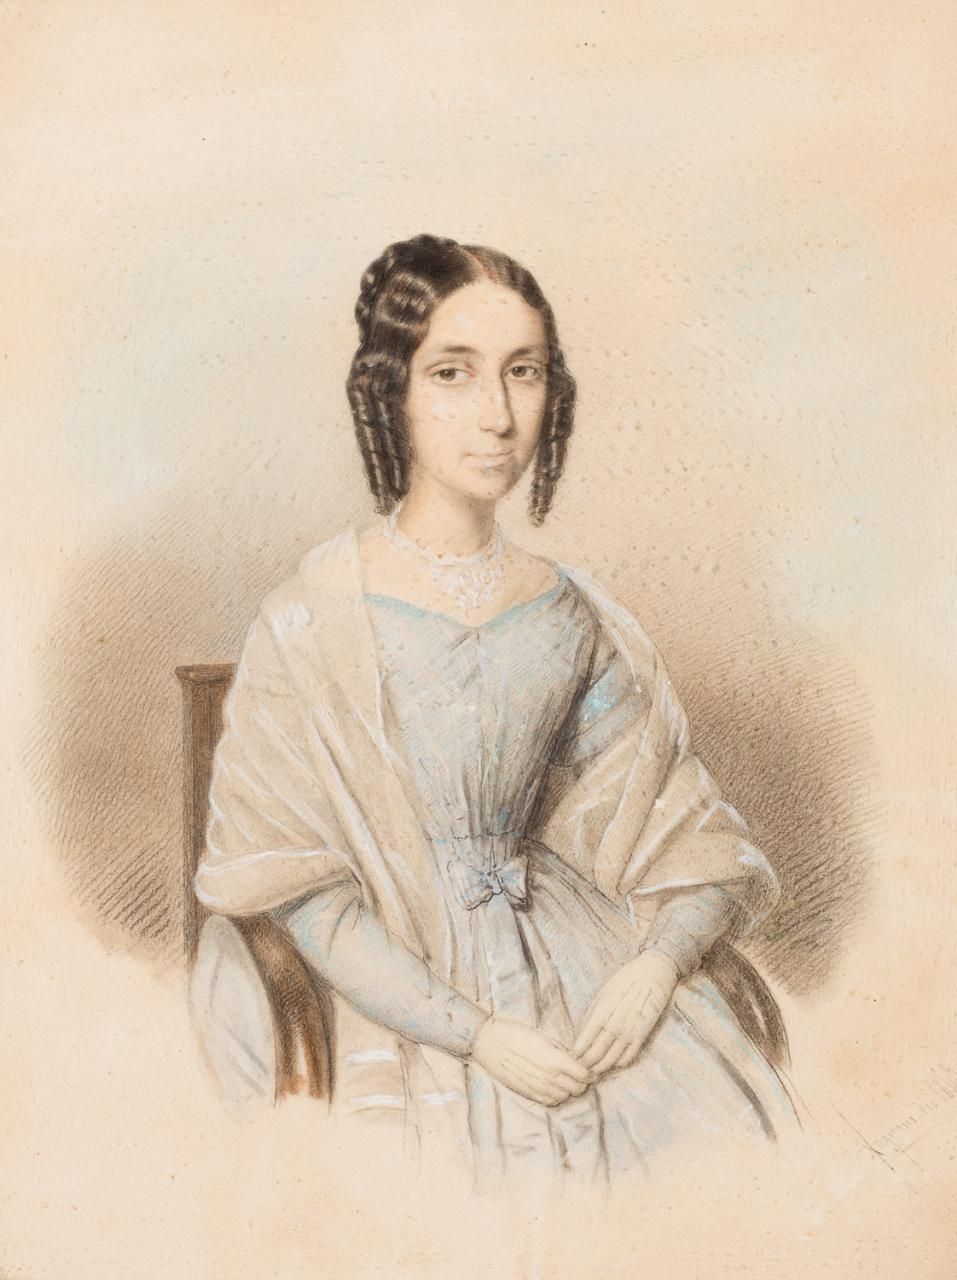 Escuela española, s. XIX 女性肖像
纸上铅笔和粉笔画
36 x 28 cm
右下角有签名和日期1845。